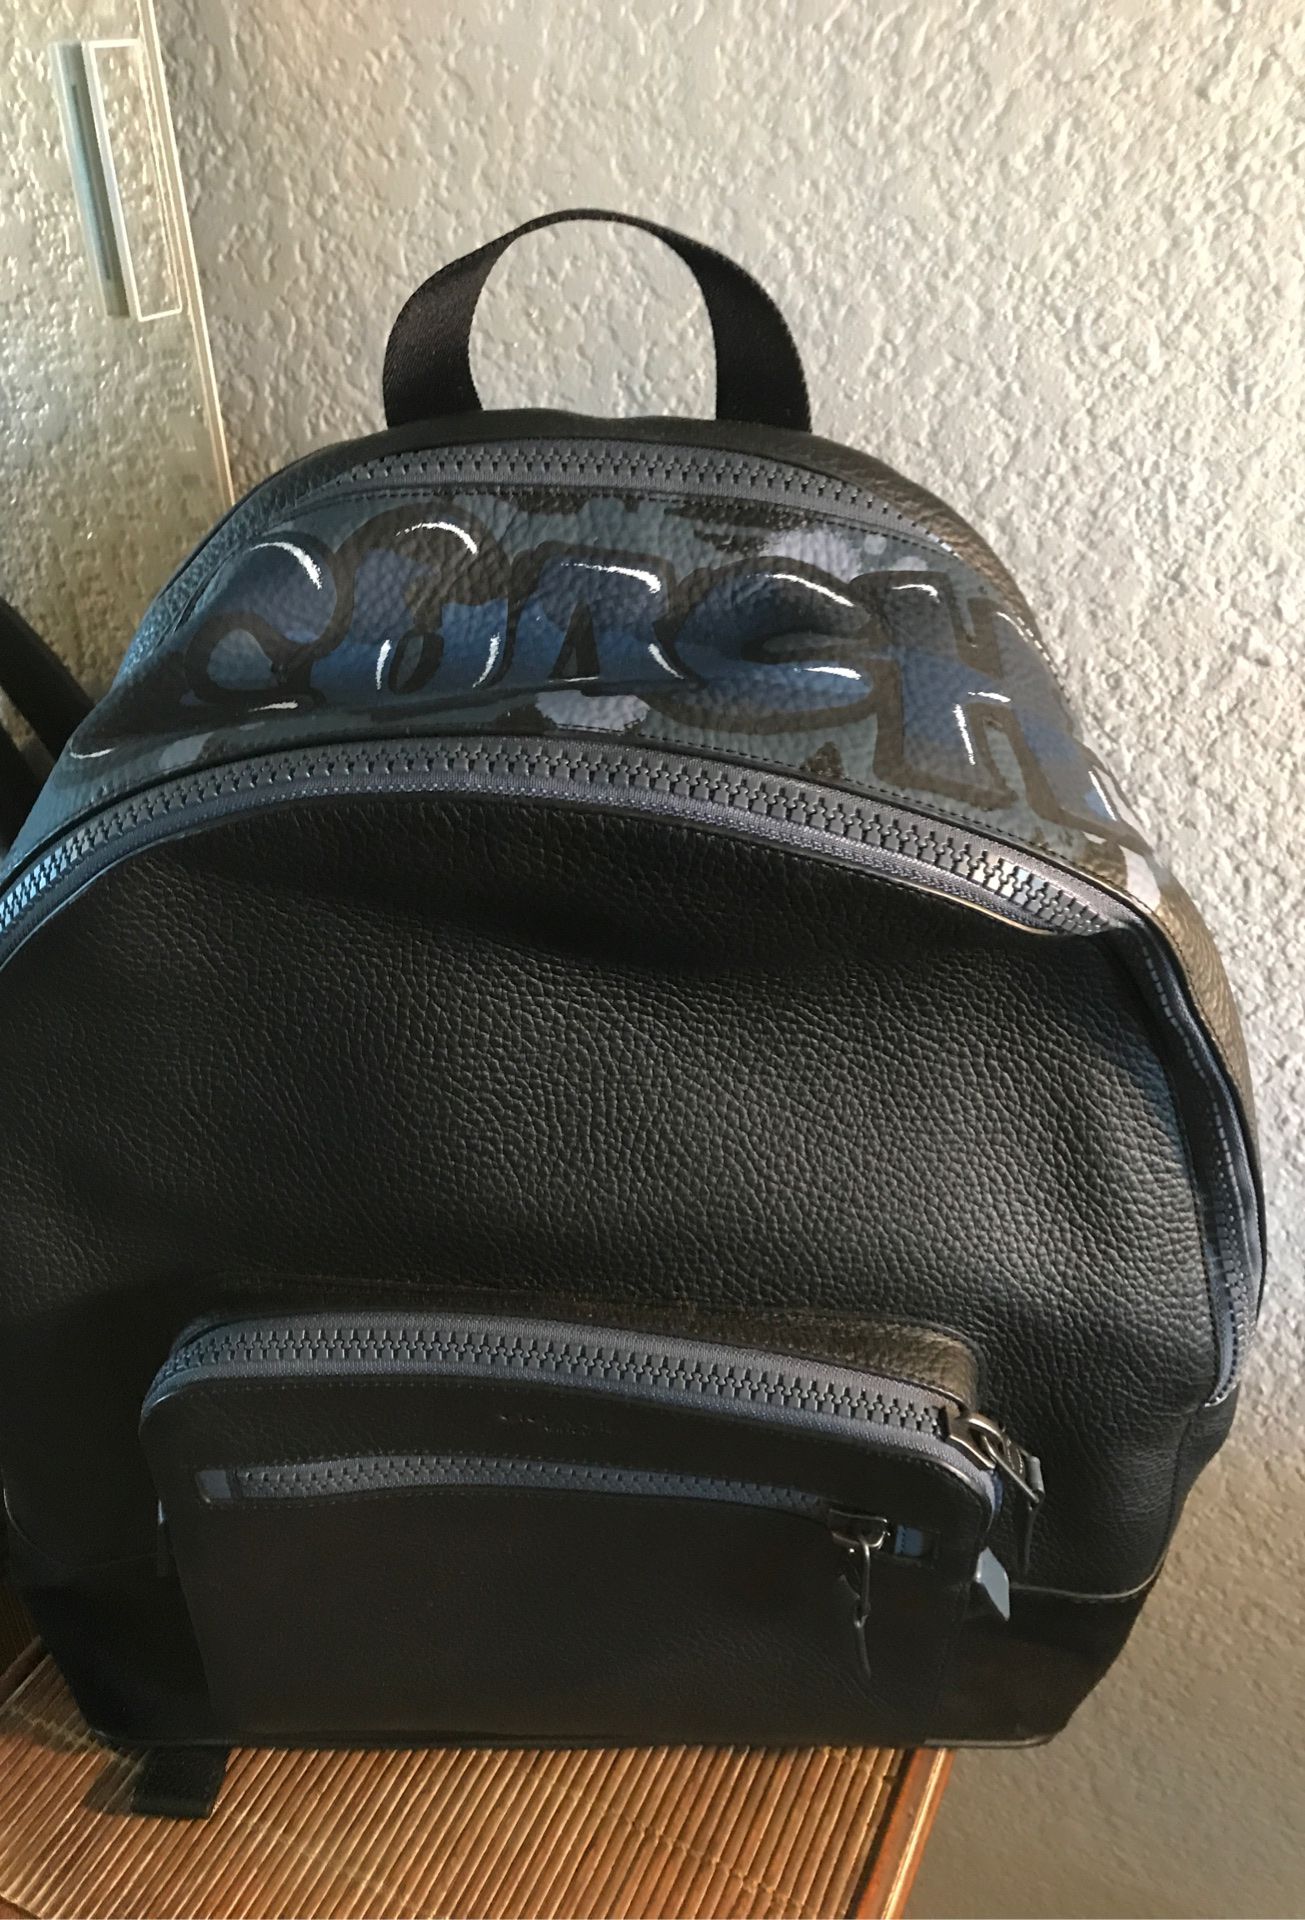 Designer coach backpack (brand new) for Sale in Henderson, NV